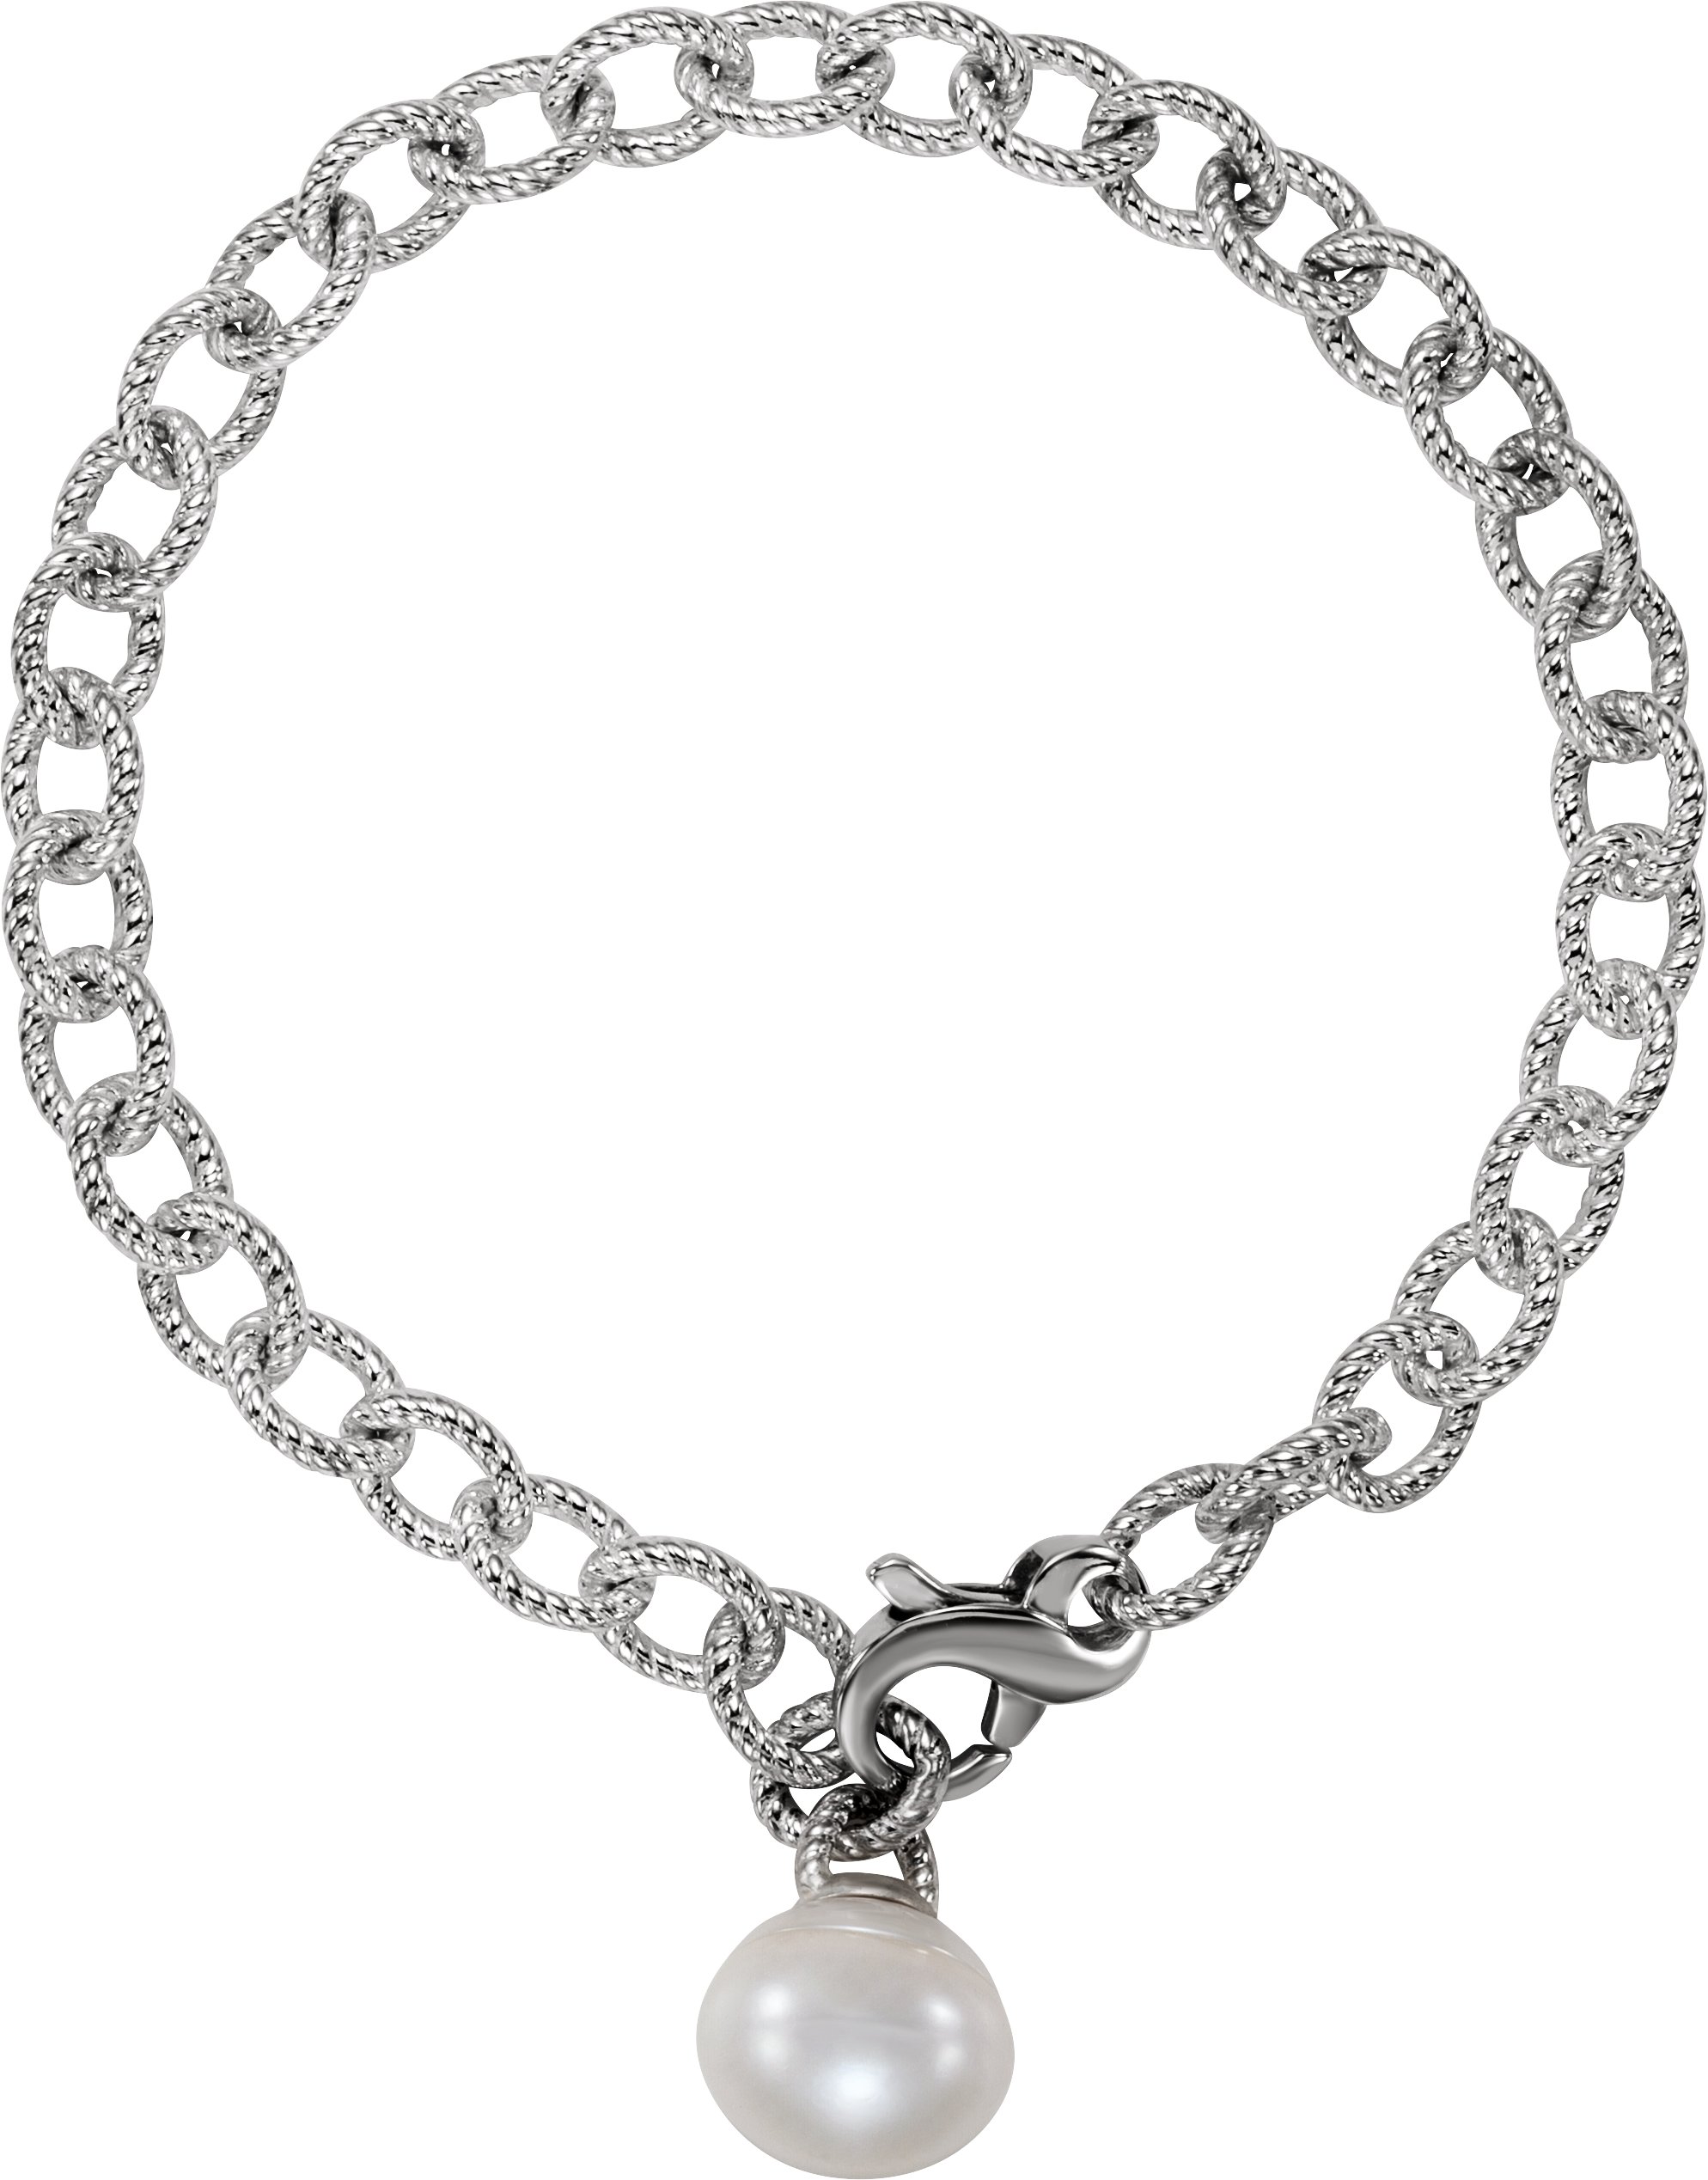 Sterling Silver Cultured White Freshwater Pearl 8 1/2" Bracelet